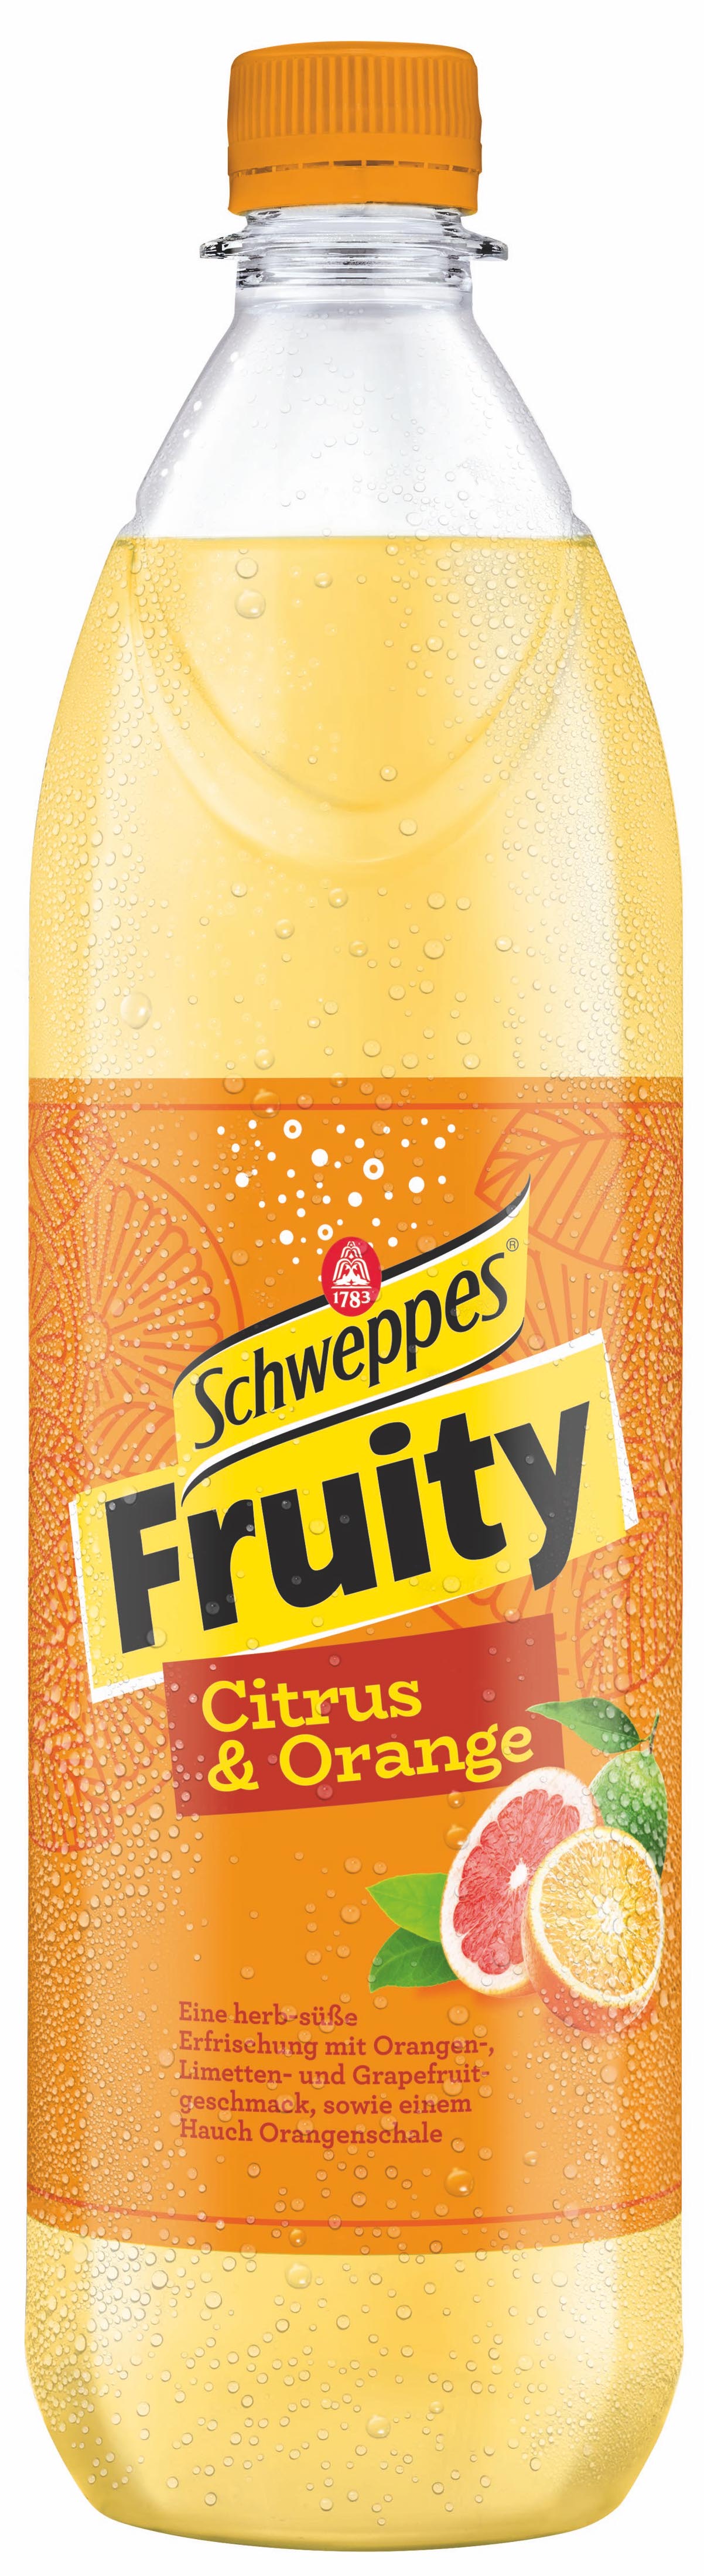 Schweppes Fruity Citrus & Orange 1,0L MEHRWEG